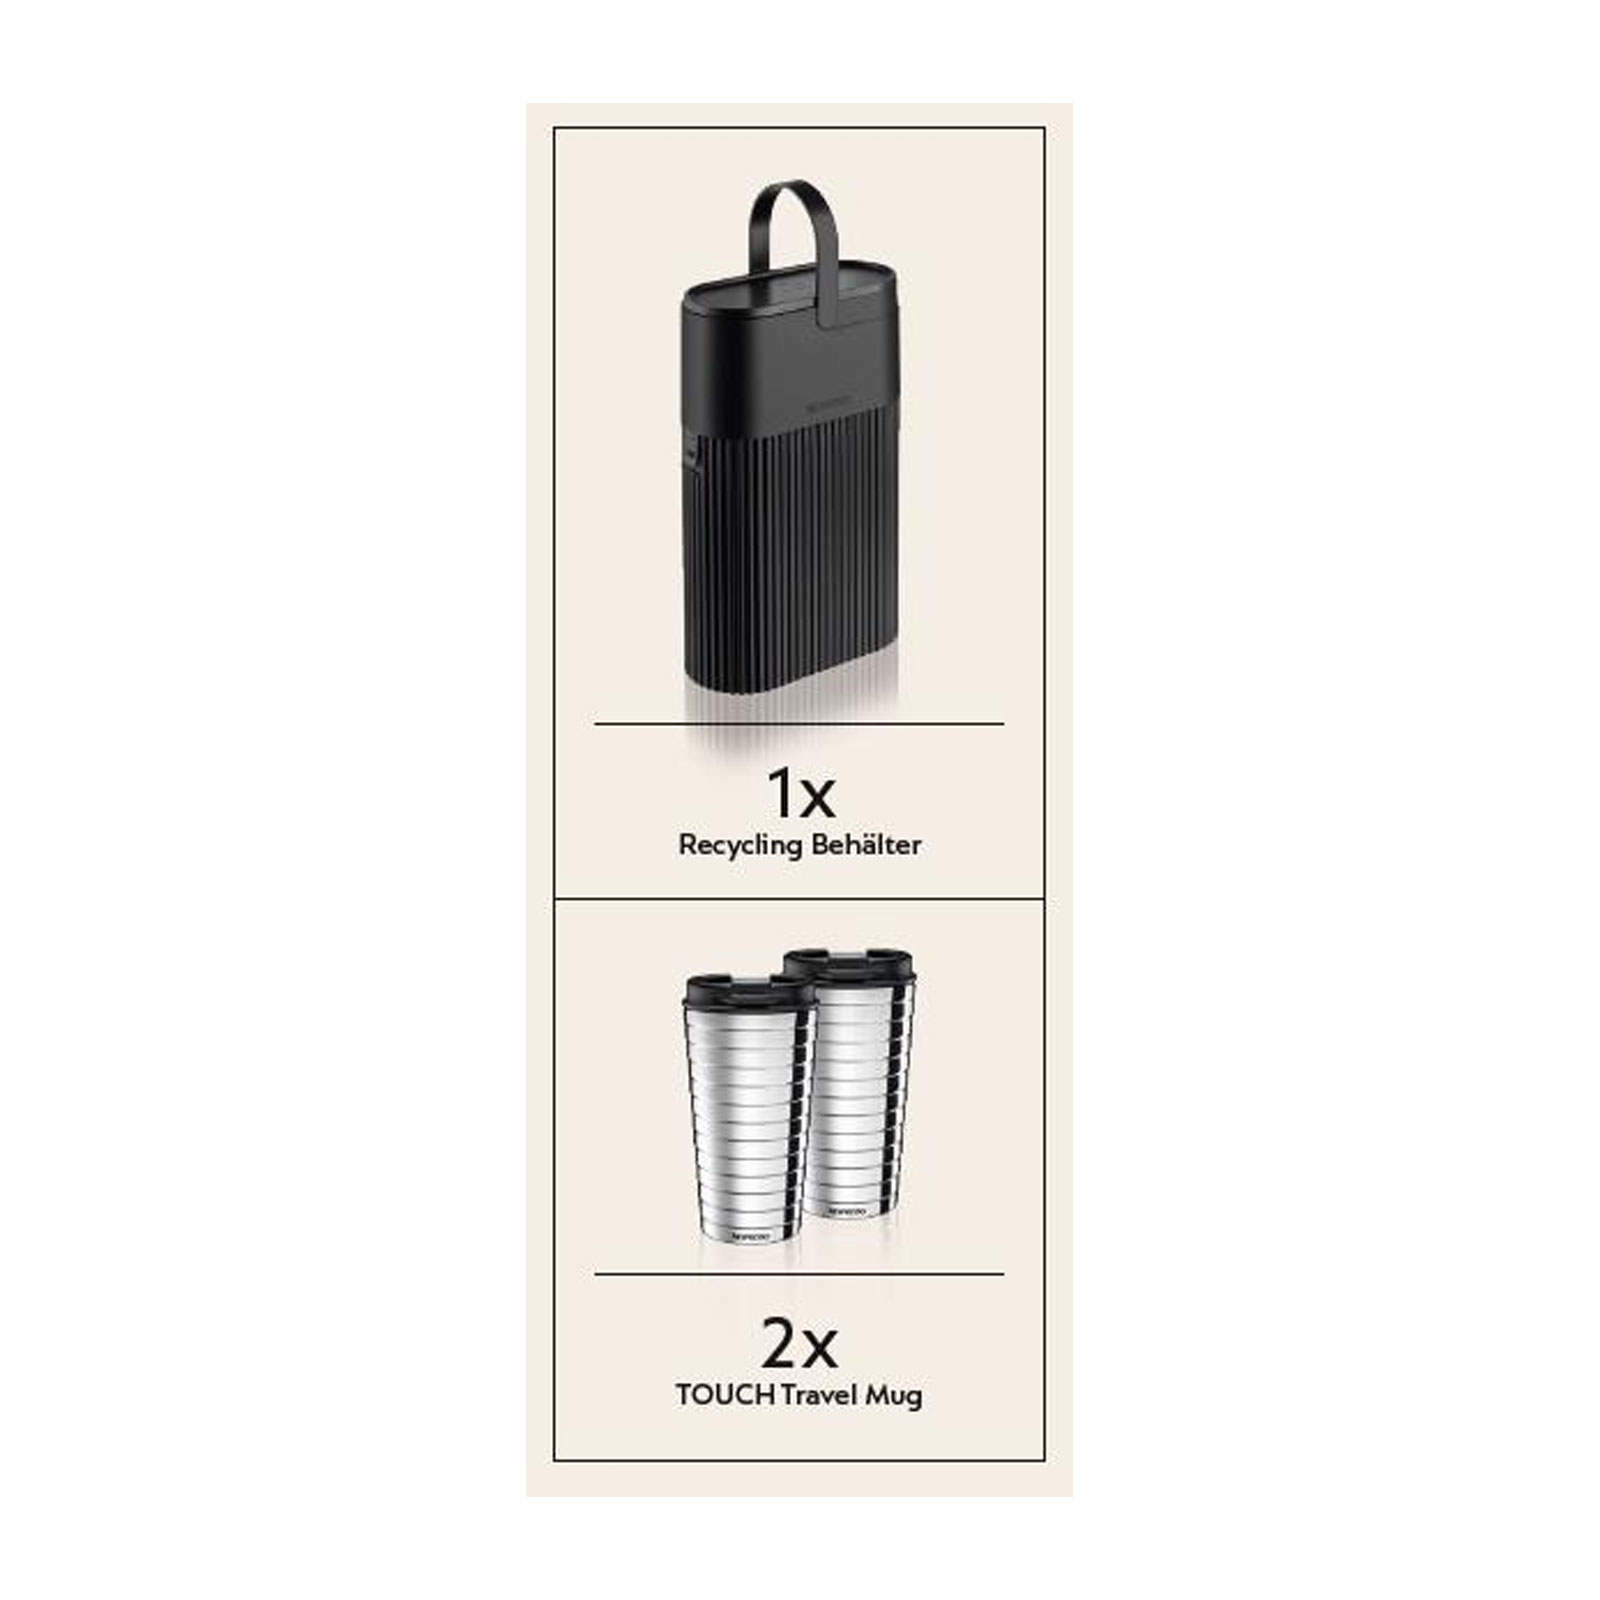 DeLonghi ENV120.W VertuoNext + Aeroccino 3 + Geschenk-Set Recycling Behälter + Travel Mug